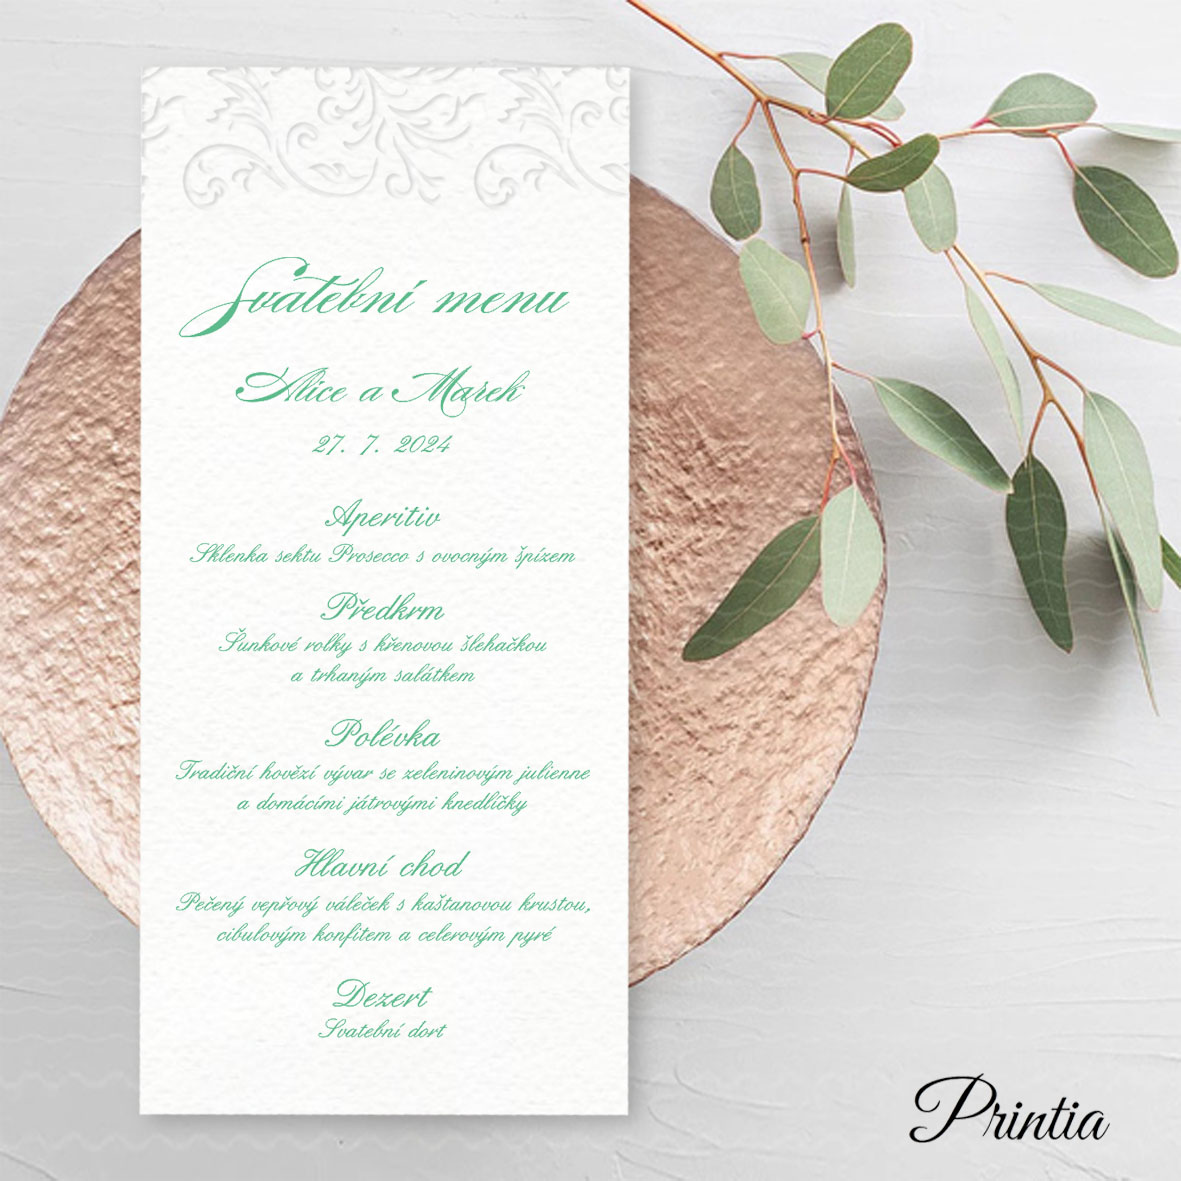 Wedding menu with embossed ornament